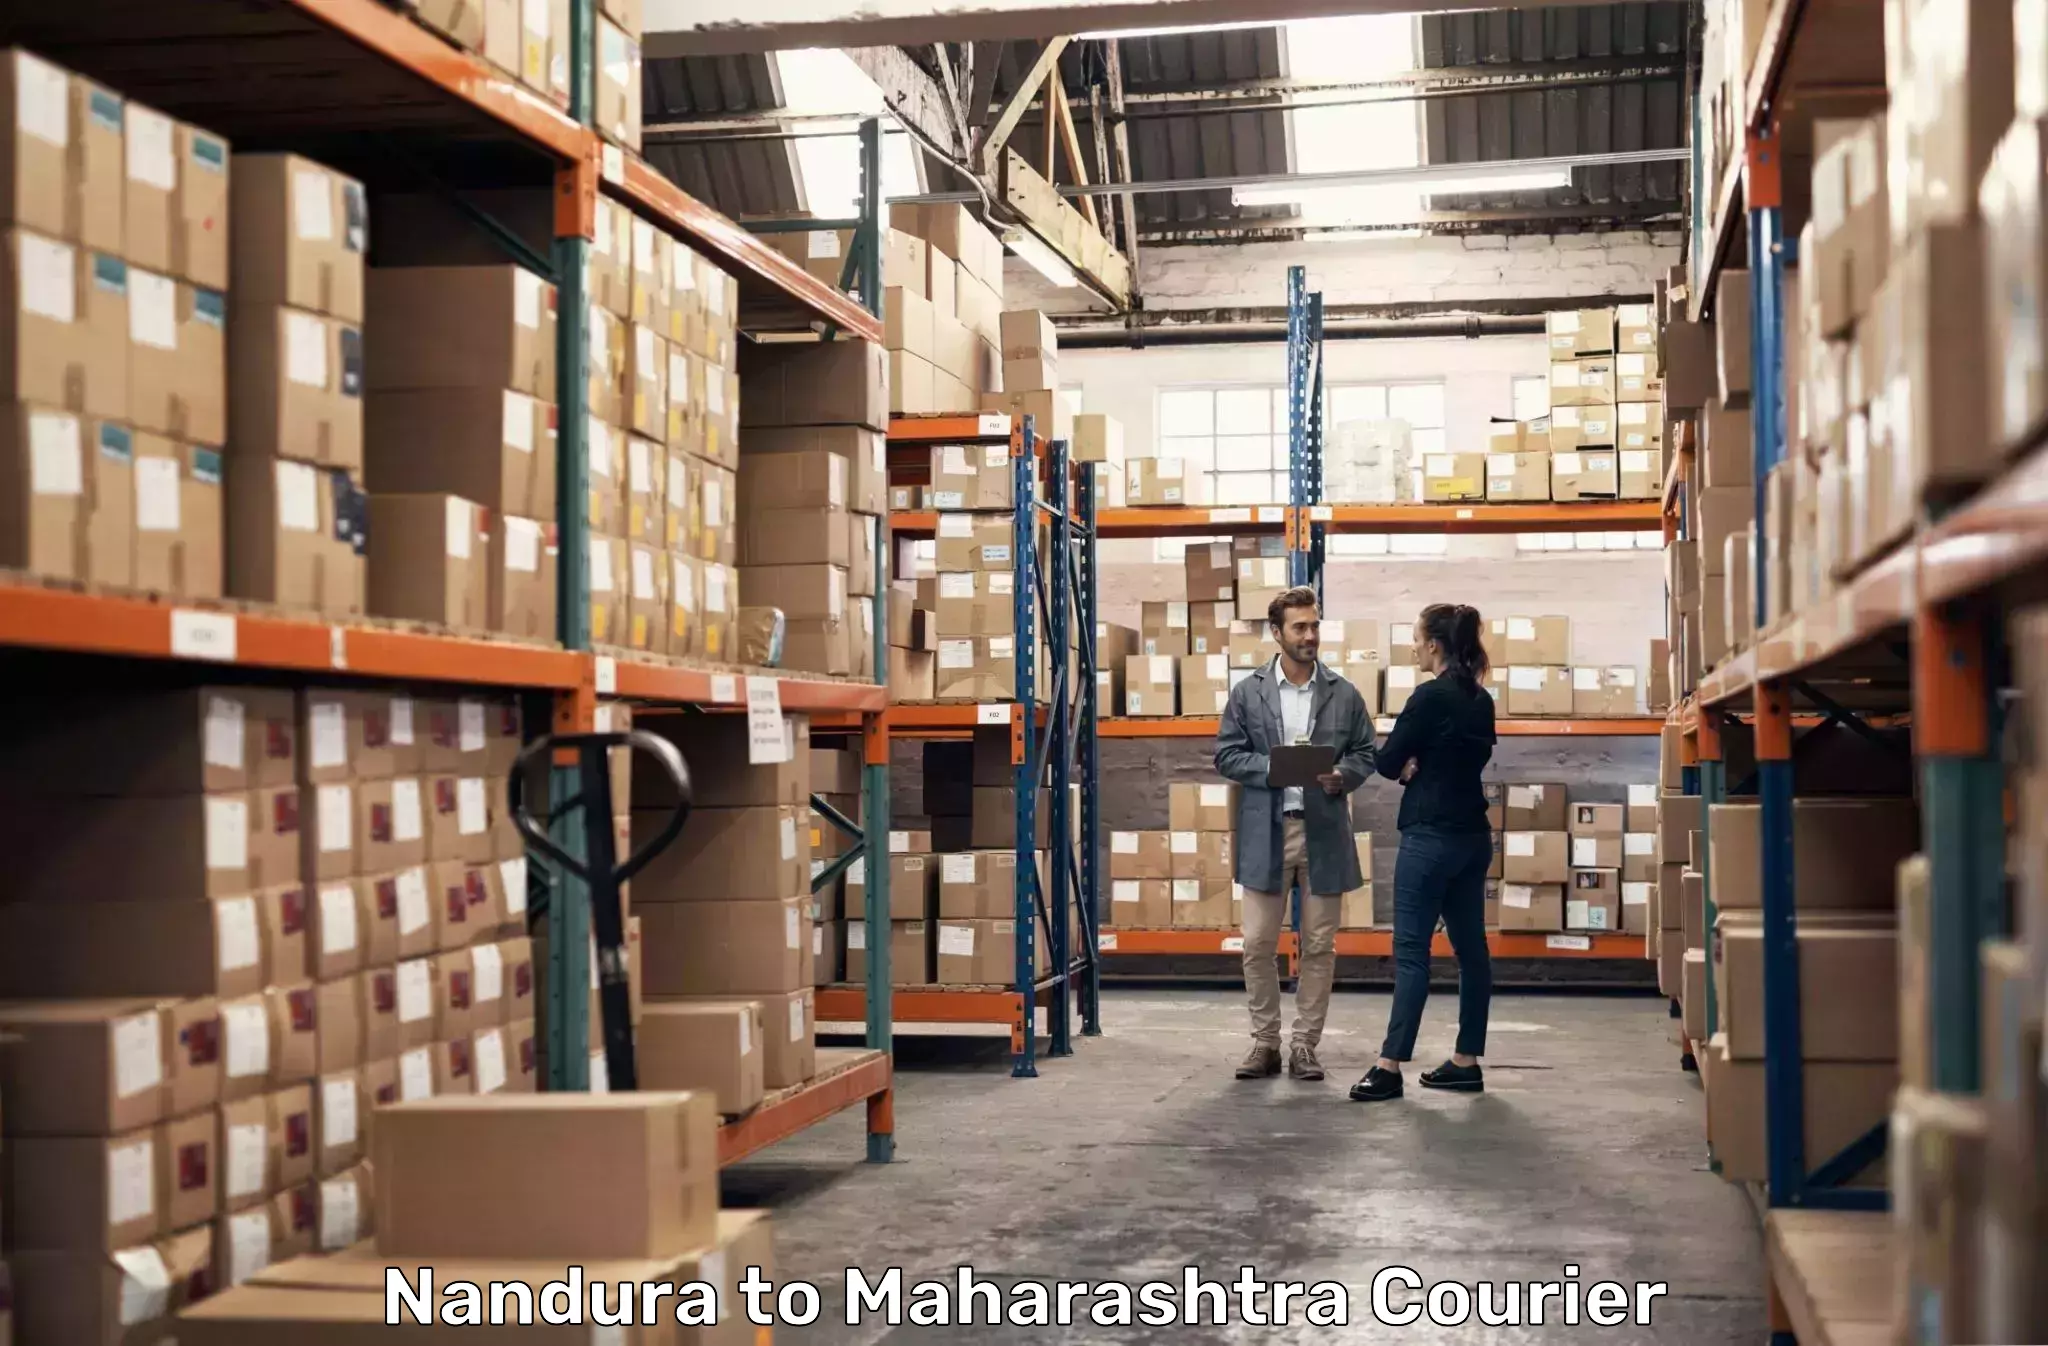 Multi-national courier services Nandura to Maharashtra